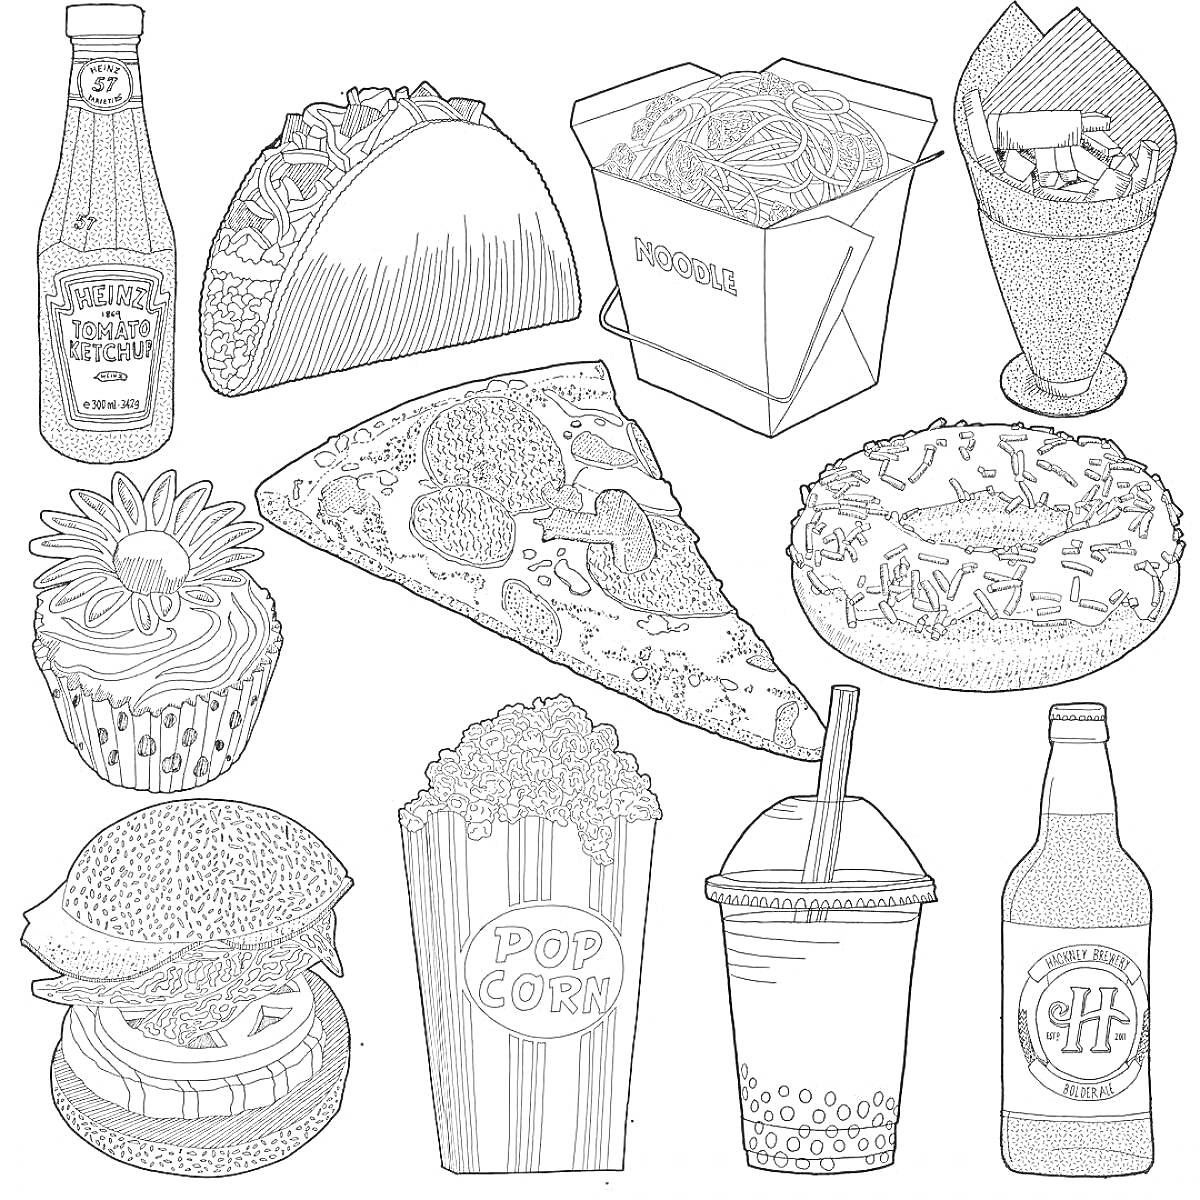 Фаст-фуд: бутылка кетчупа, тако, коробка лапши, стакан с картошкой фри, пончик, кекс, кусок пиццы, бургер, попкорн, напиток с трубочкой, бутылка напитка